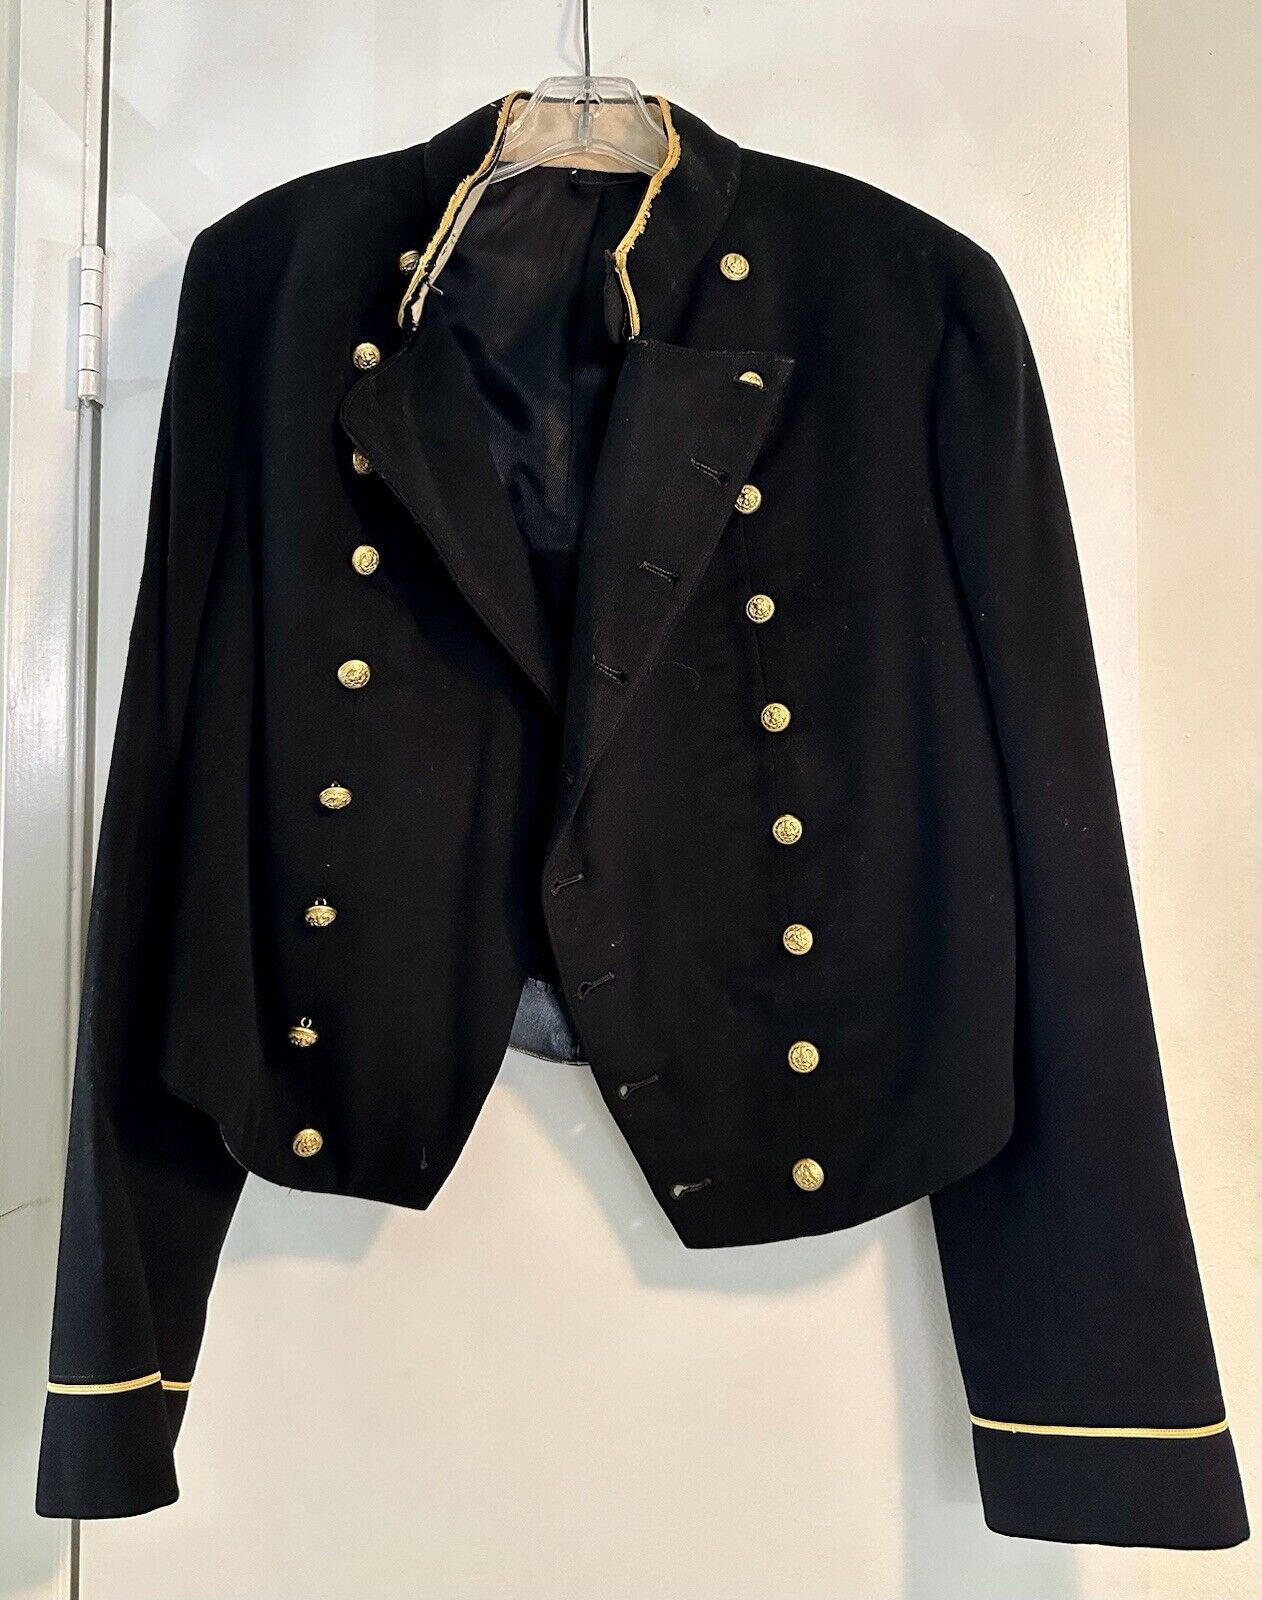 Vintage U.S. Navy Military Uniform Jacket